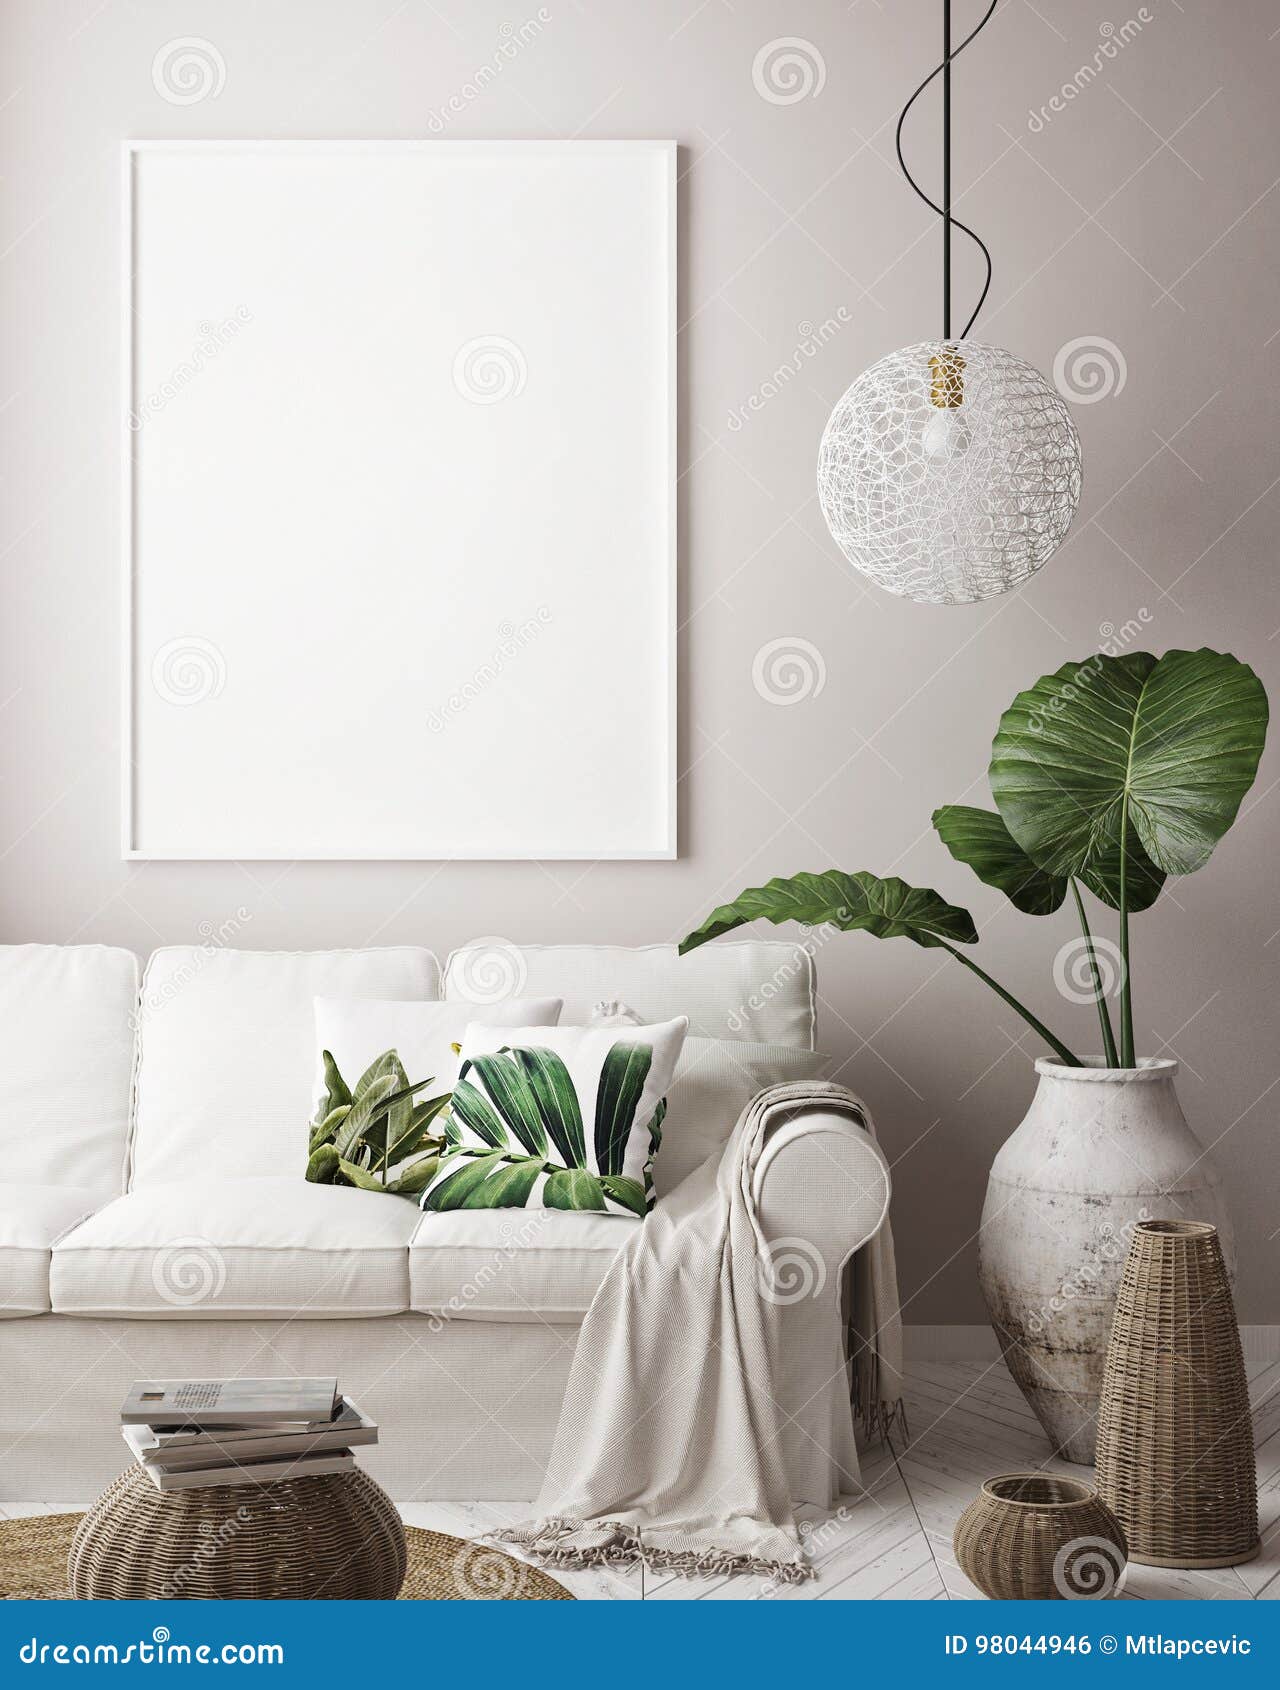 Mock Up Poster Frame in Tropical Bedroom Interior Background